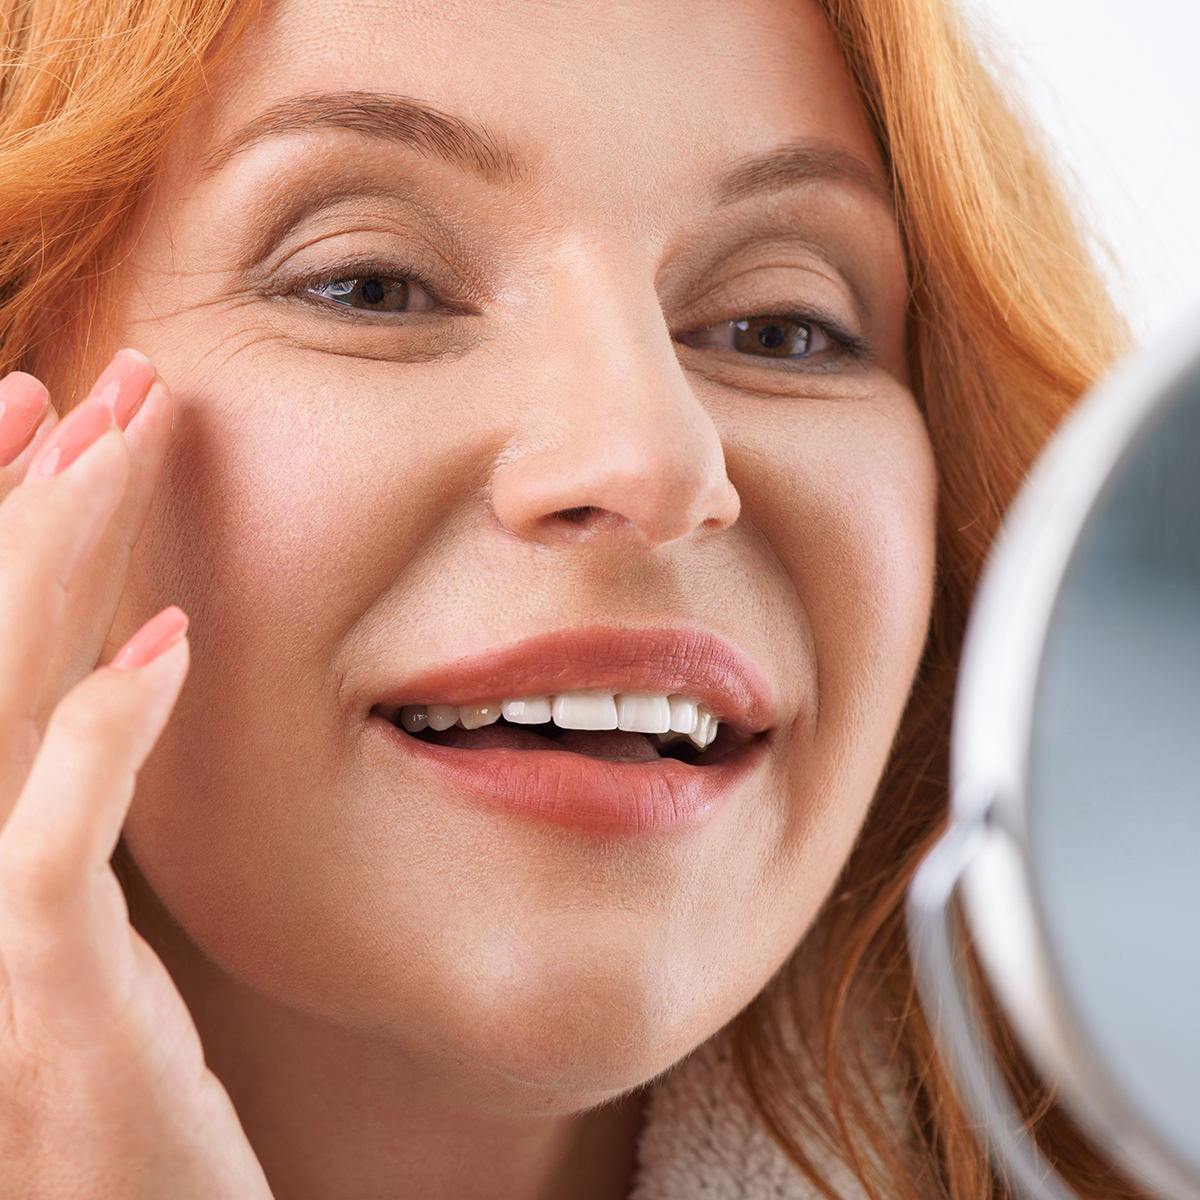 mature redhead woman smiling in mirror touching skin